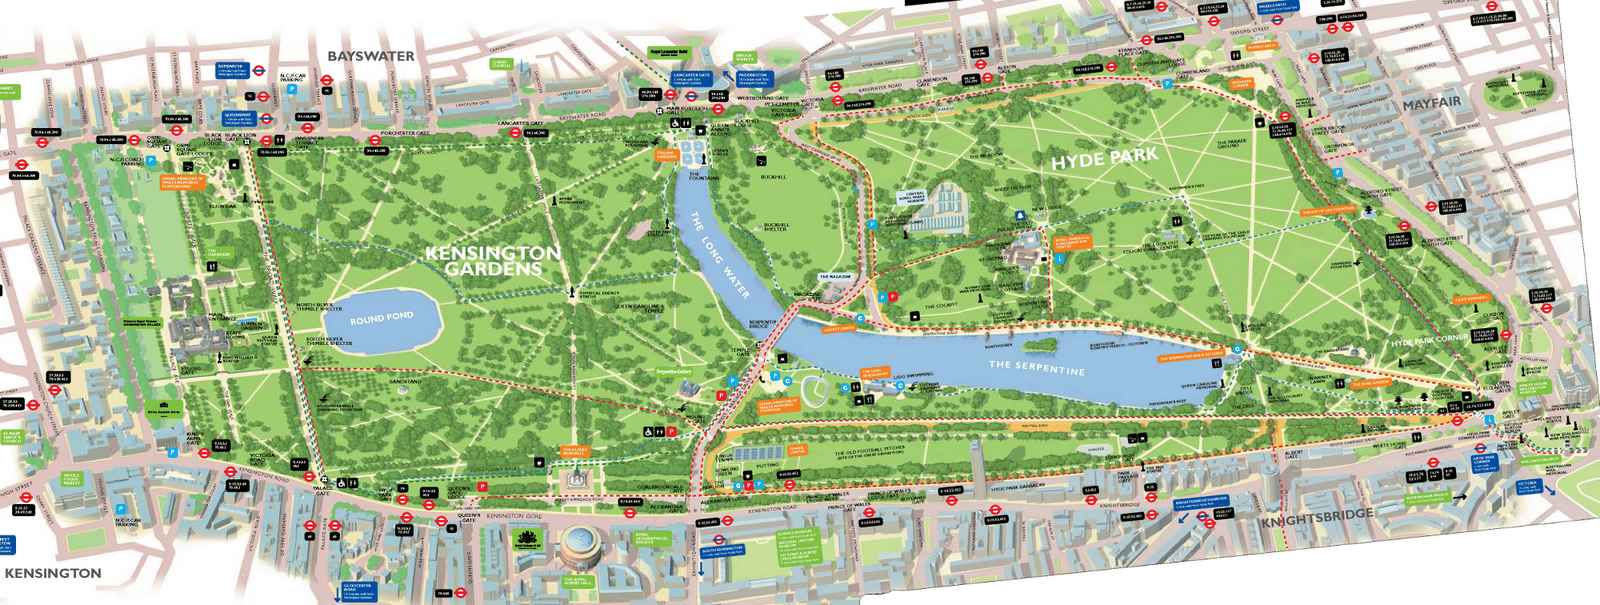 Hyde Park Kensington Gardens Map1 